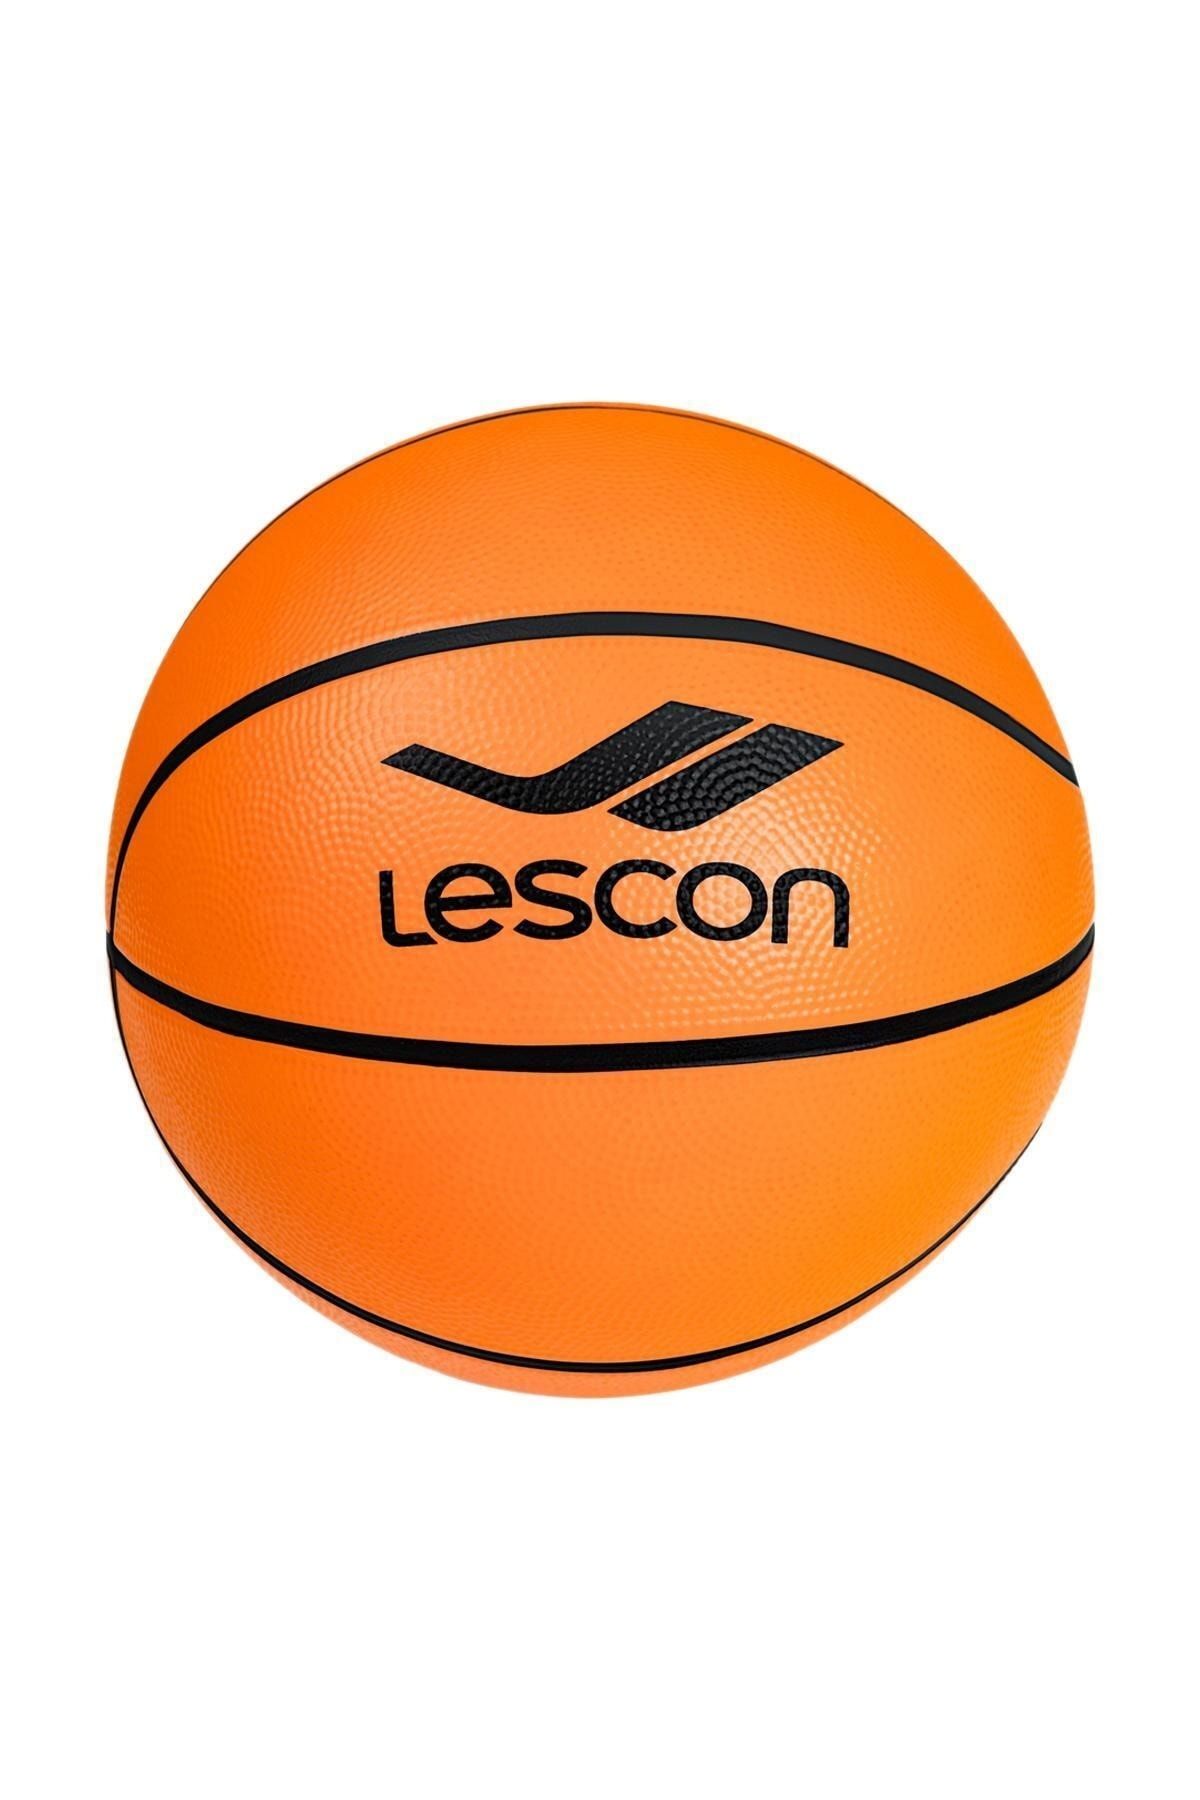 Lescon La-3511 No 7 Training Basketbol Topu Turuncu X Spor Malzemeleri